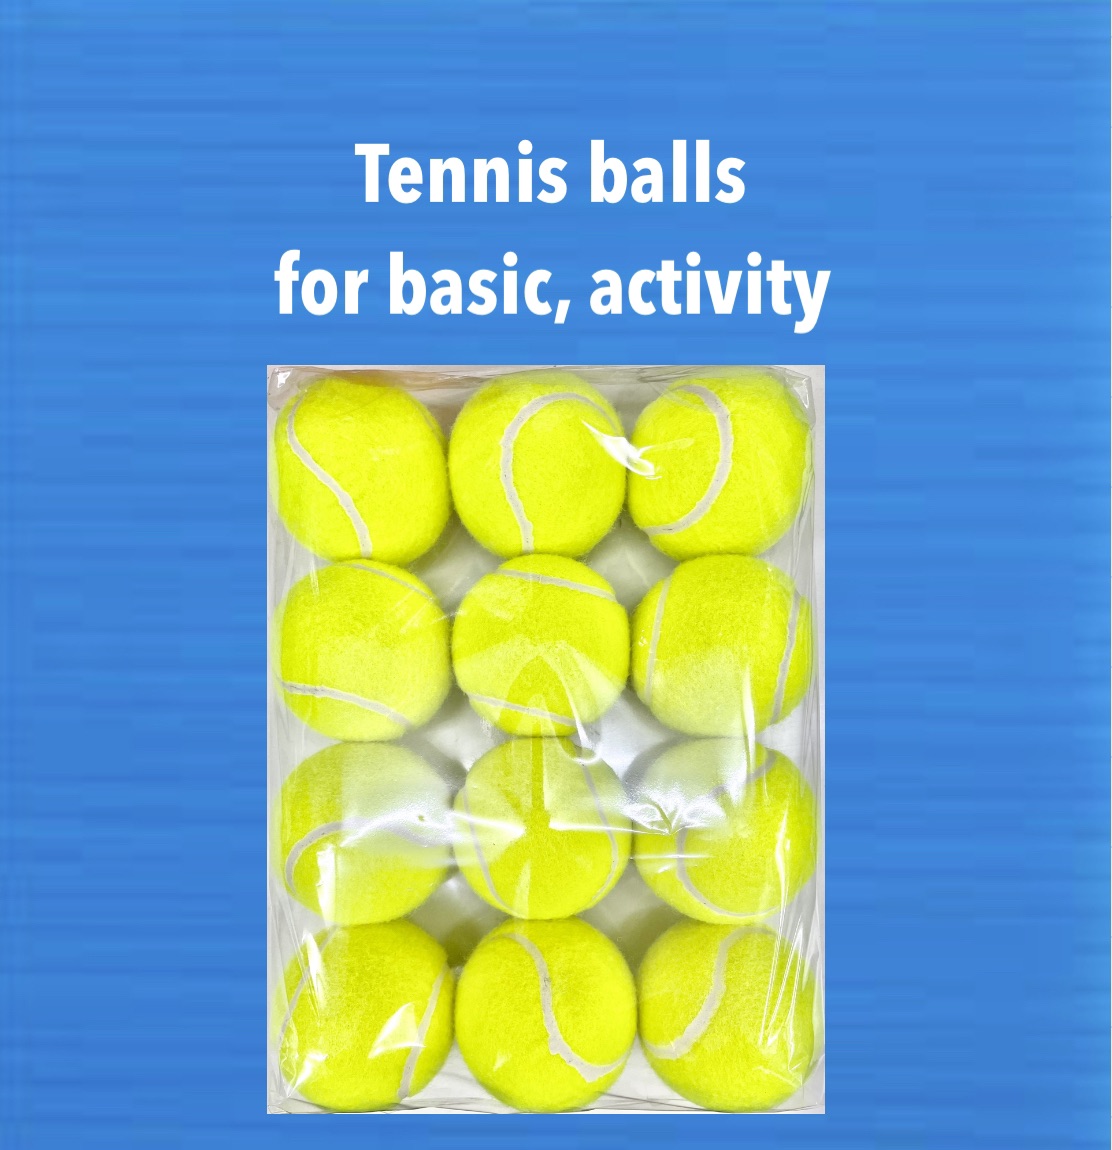 Tennis balls 1 pack(12 balls) ลูกเทนนิสซ้อม คุณภาพดีเหมาะสำหรับผู้ฝึกหัดเล่น ออกกำลังกาย ใช้ทำกิจกรรมต่างๆ  (suitable for training and exercise)